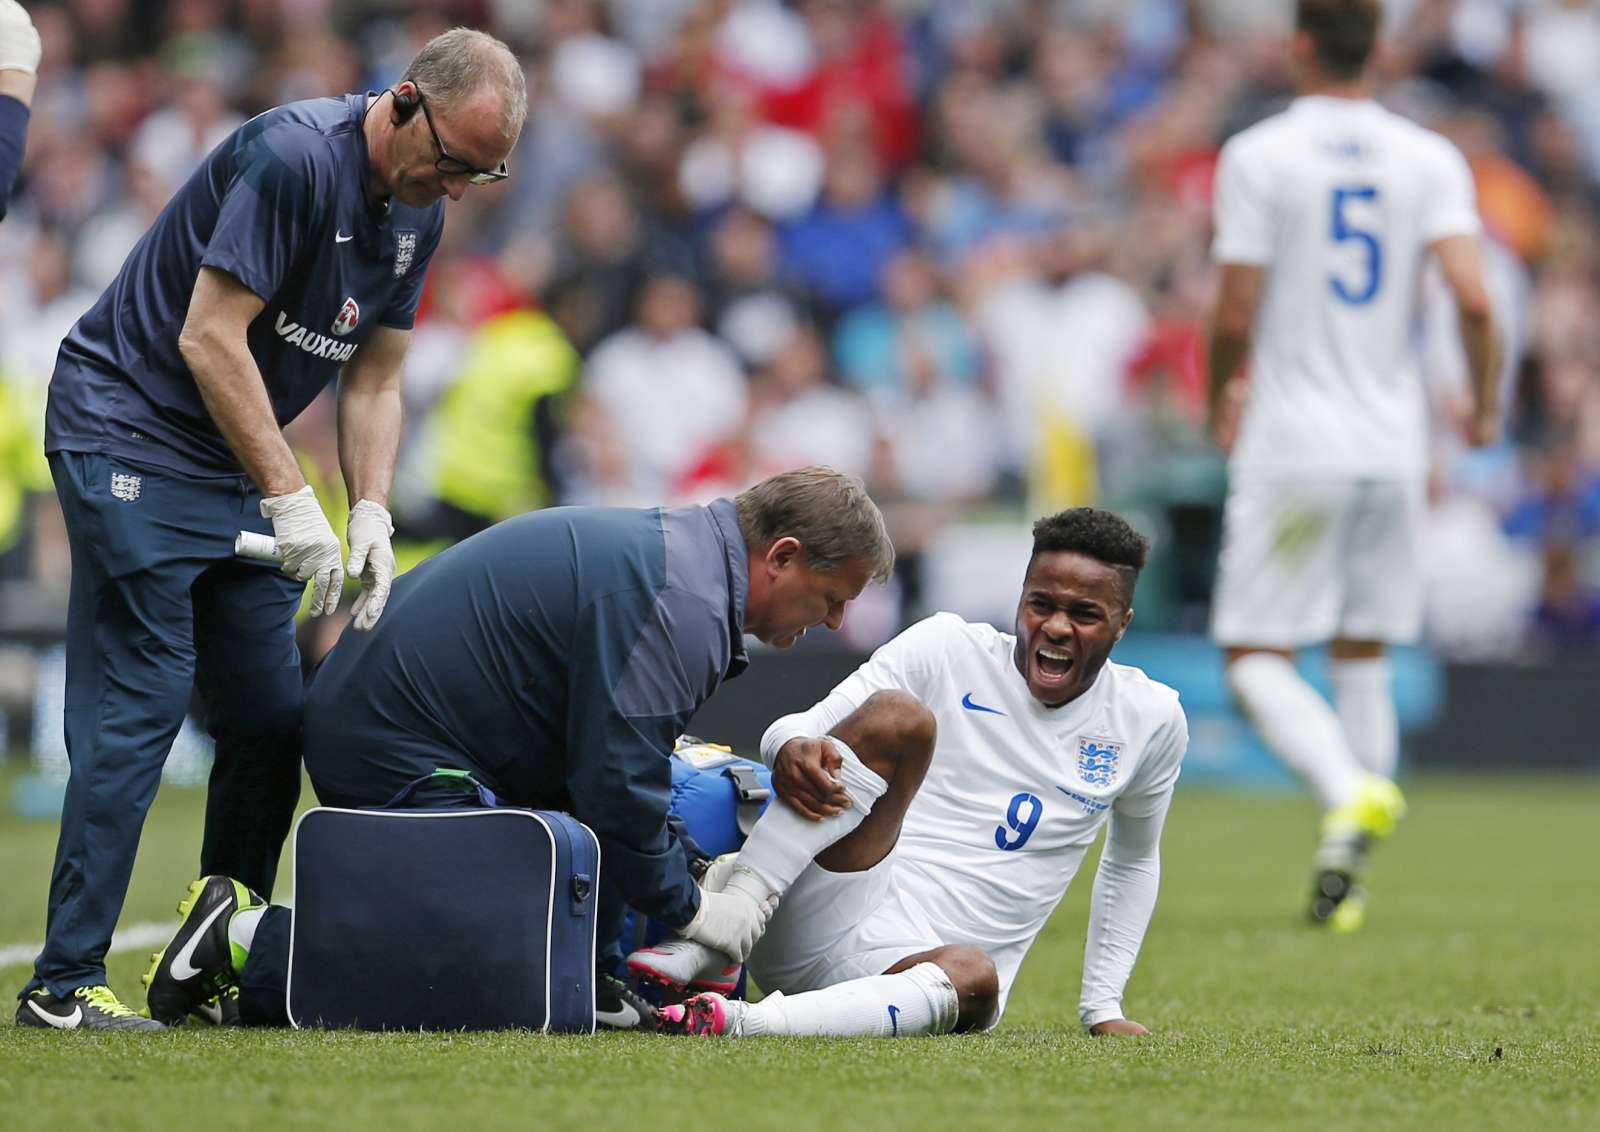 Football medical team treating an injured football player